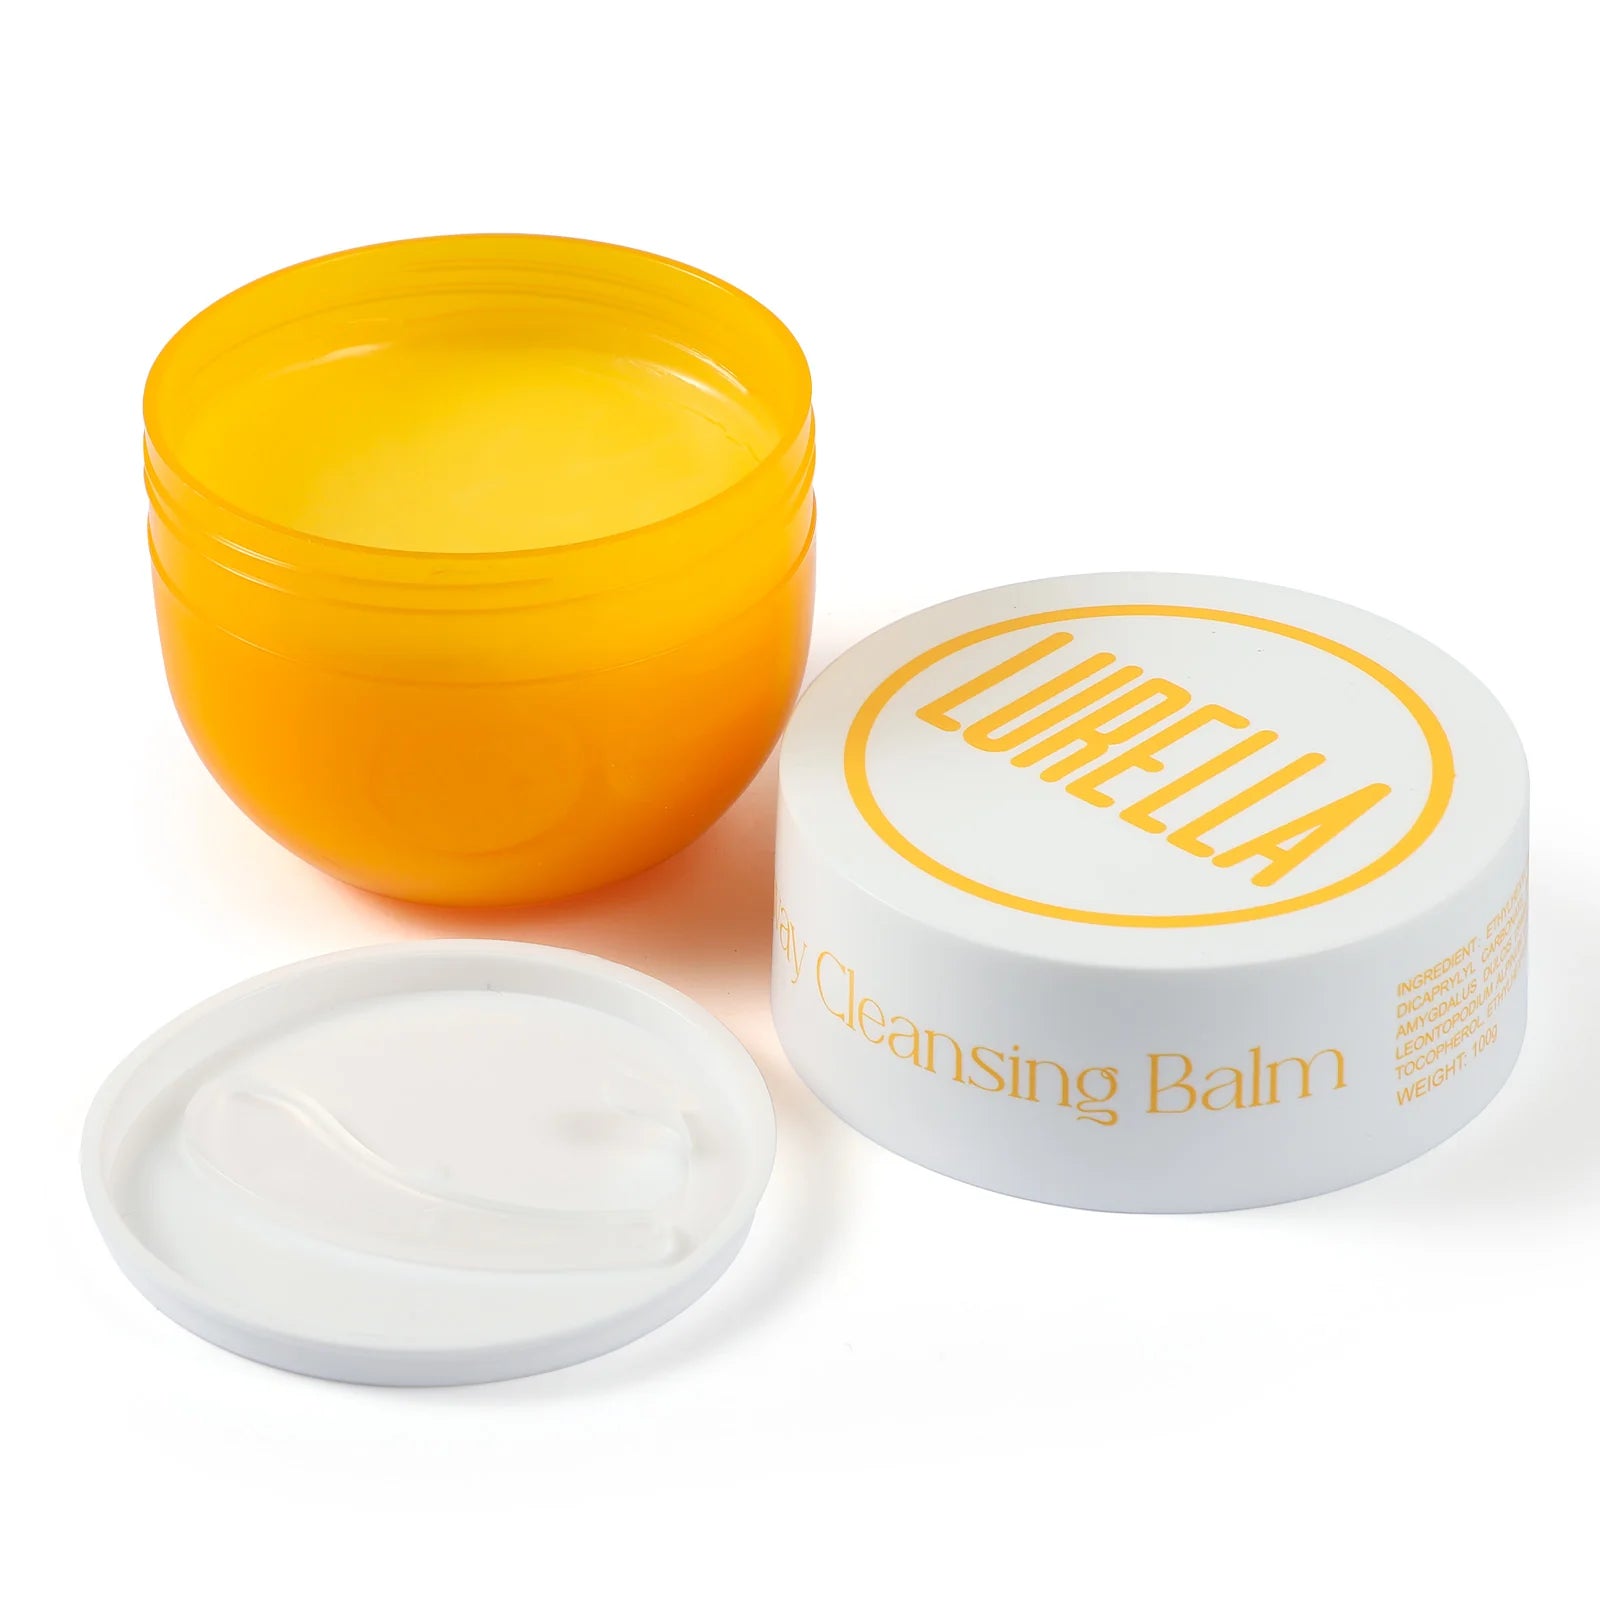 Lurella Cosmetics - Melt Away Cleansing Balm